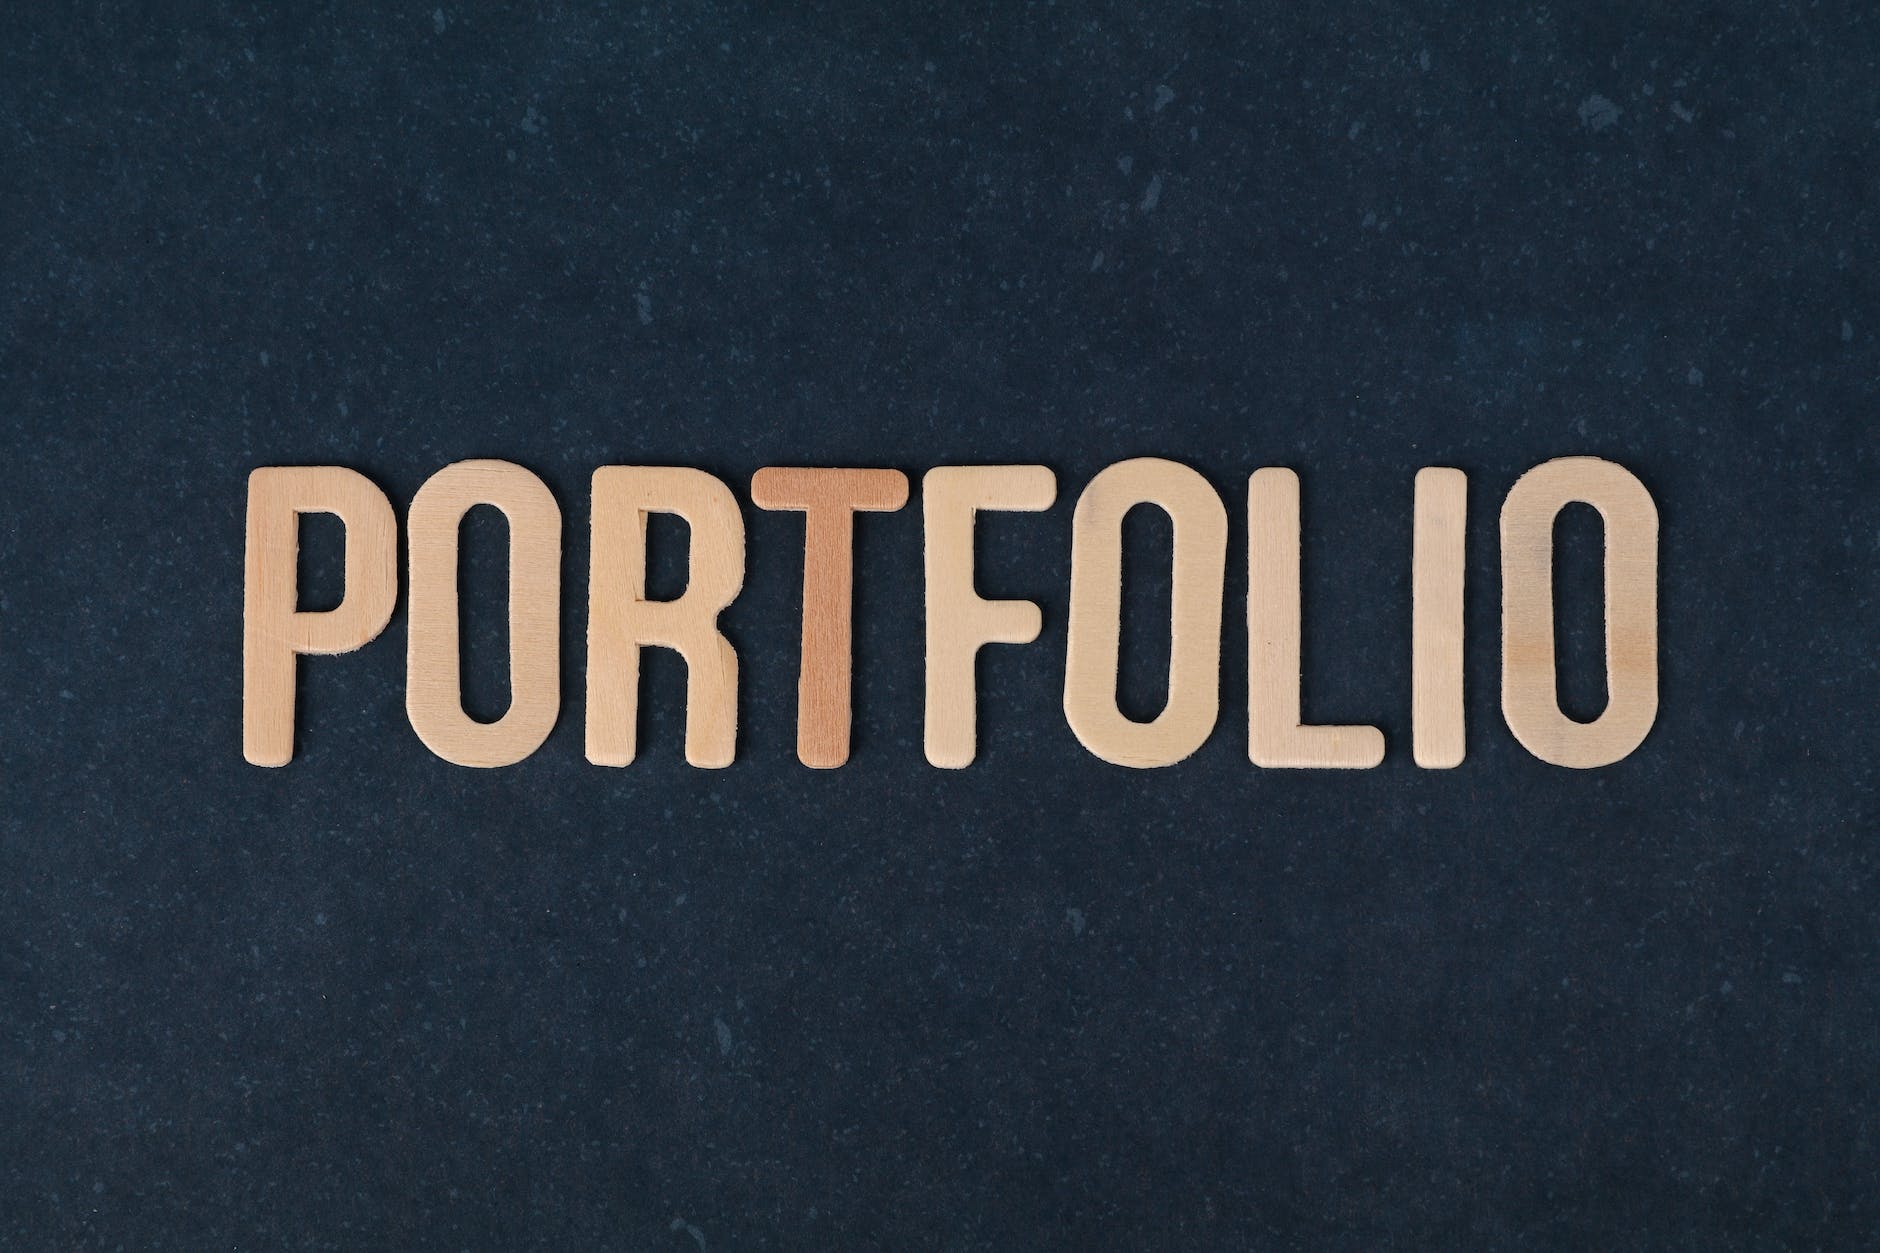 several ways to diversify your portfolio